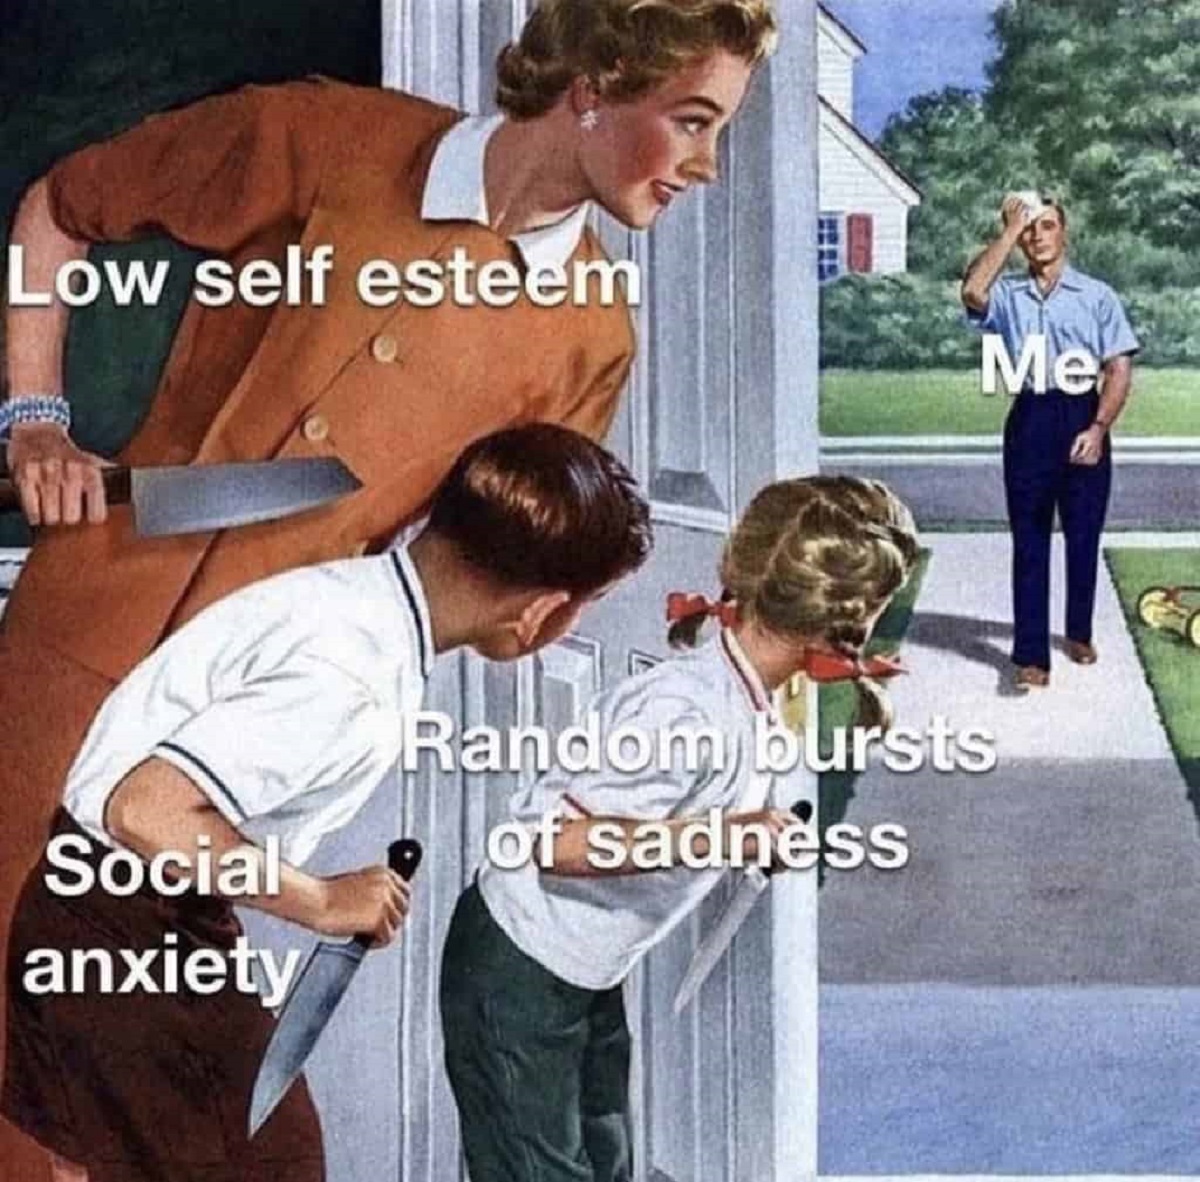 Meme - Low self esteem Random bursts Social of sadness anxiety Me